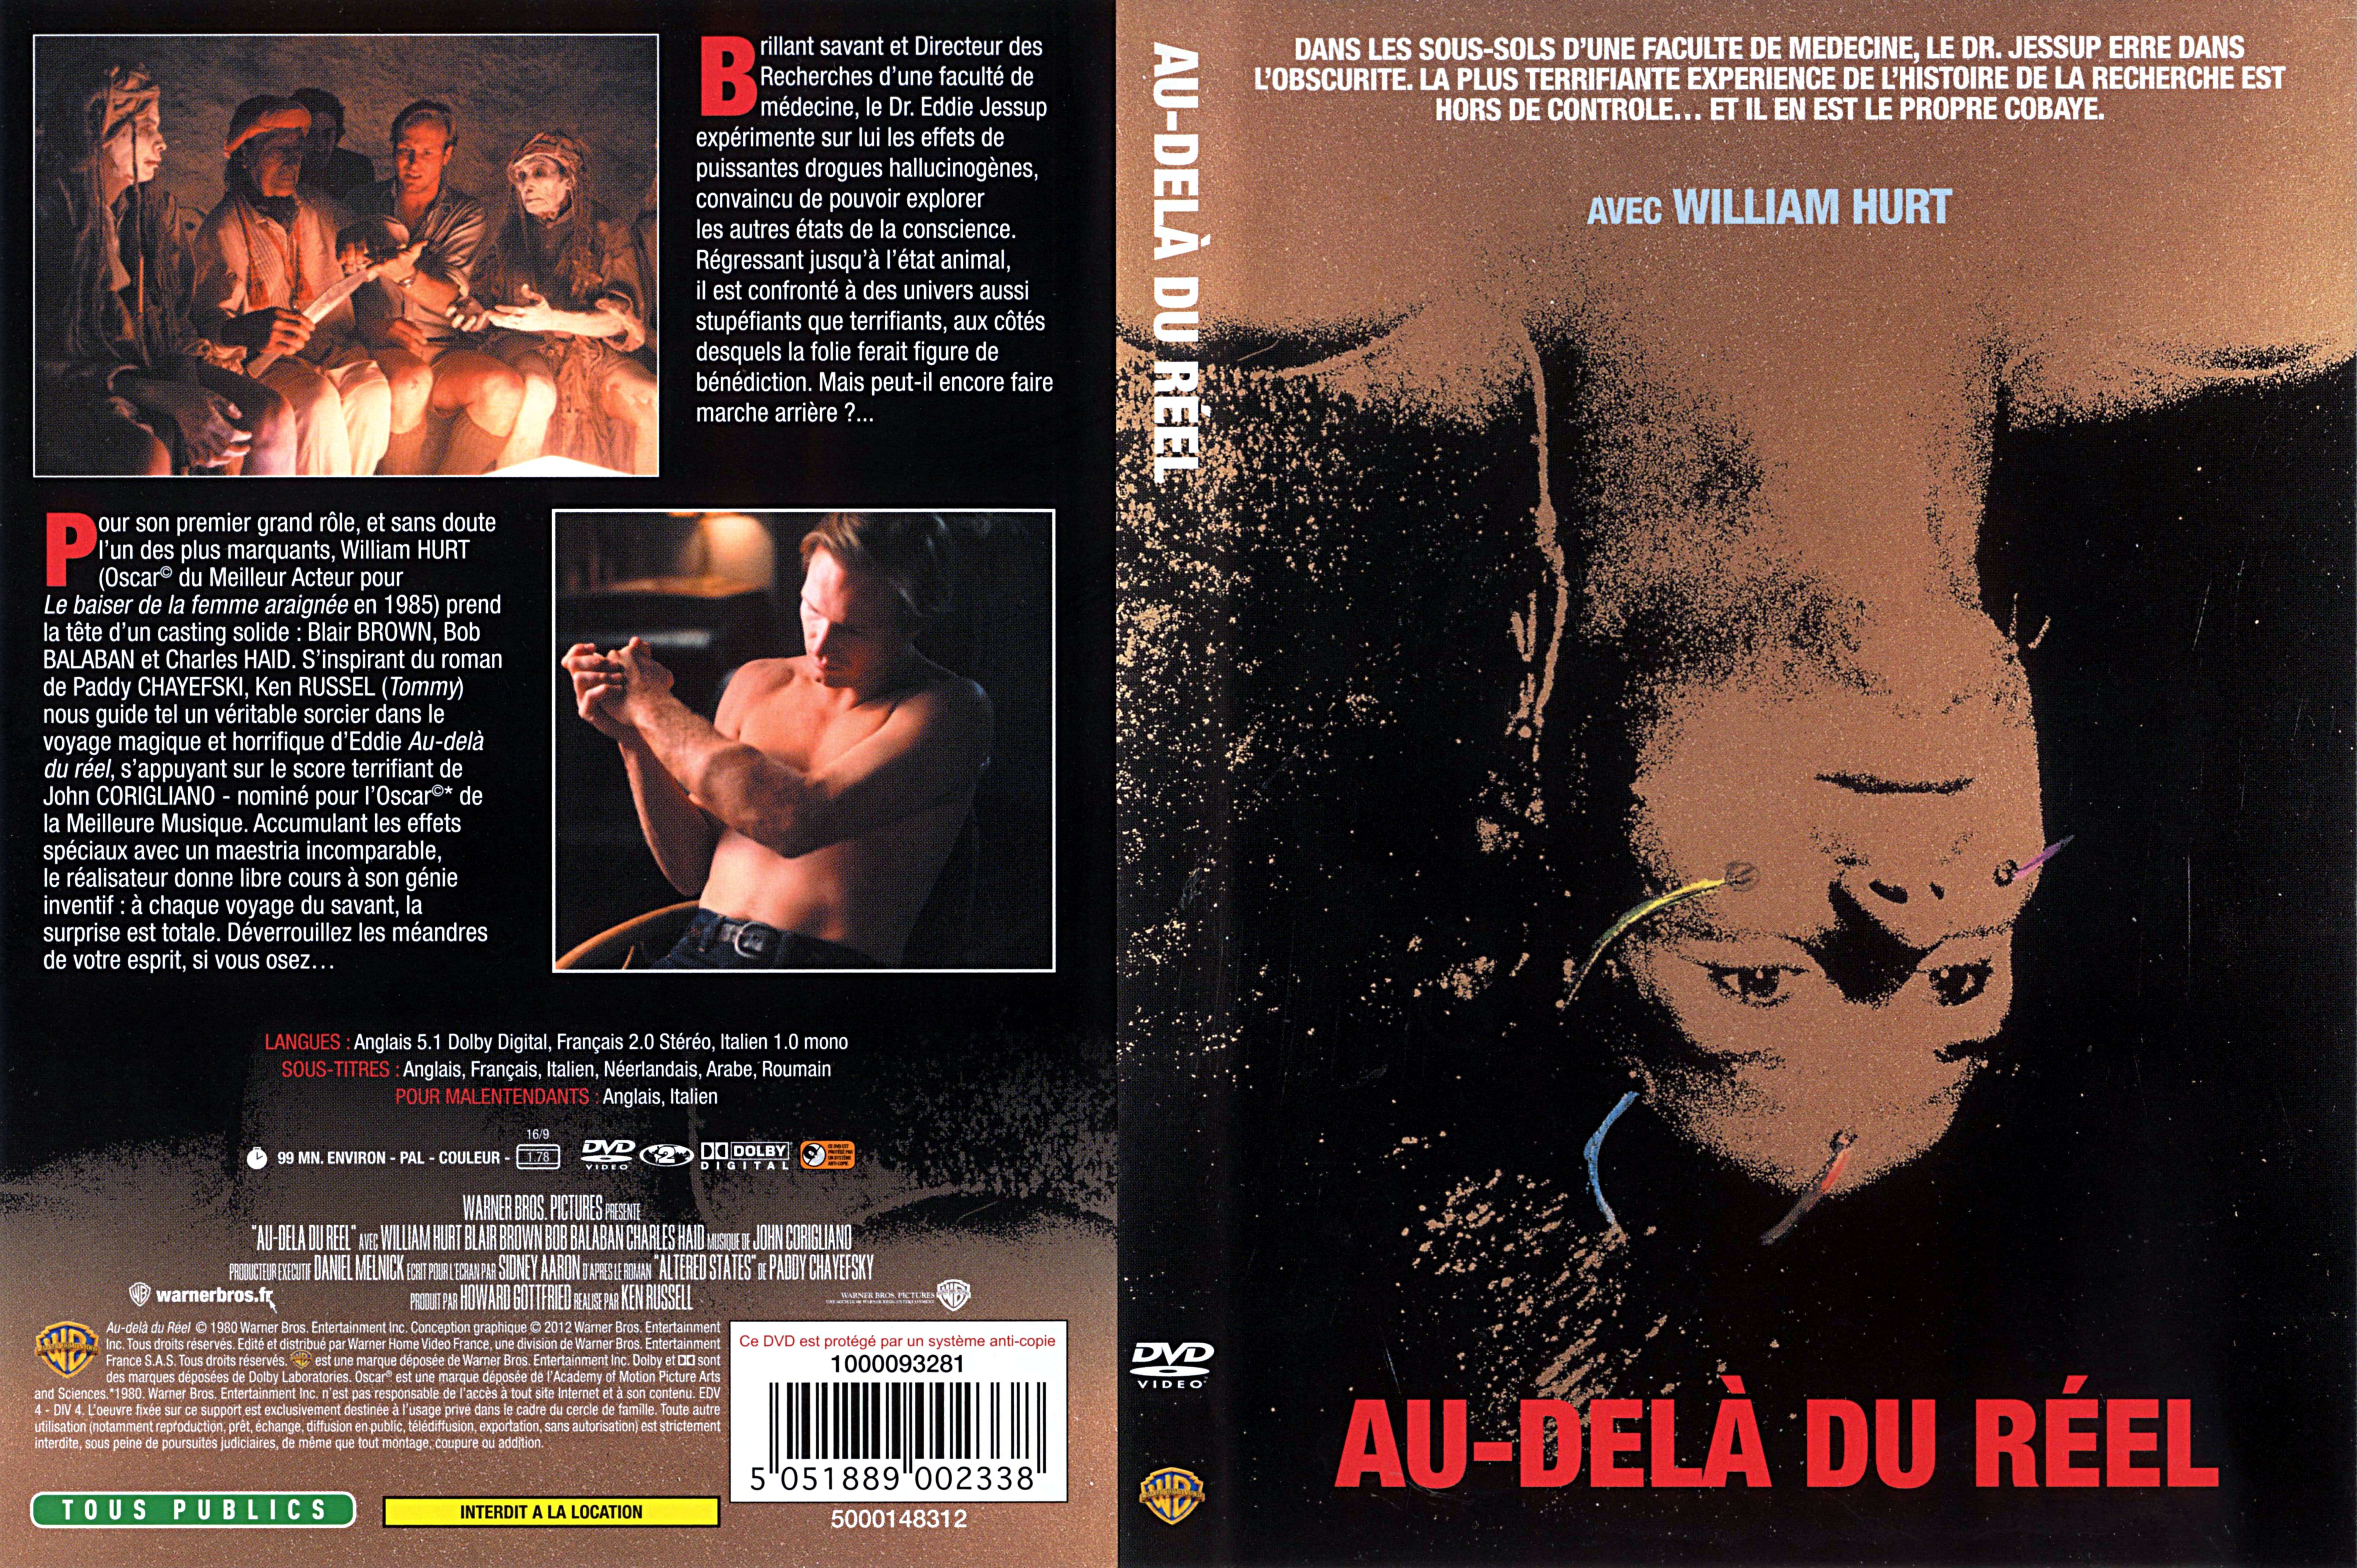 Jaquette DVD Au-del du rel v2